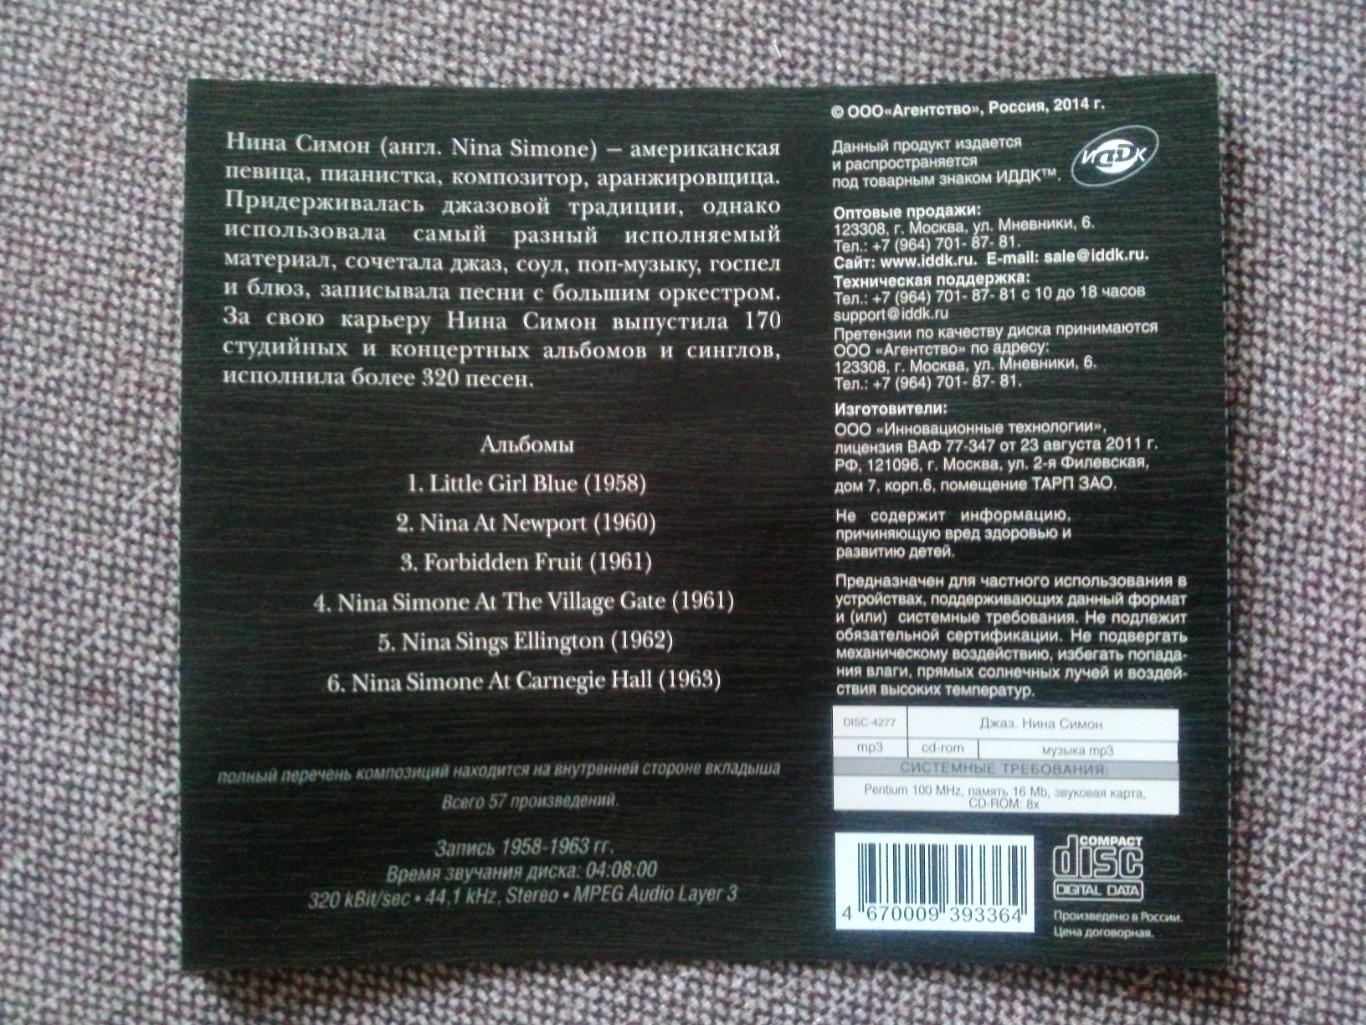 MP - 3 CD диск : Нина Симон (Nina Simone) 1958 - 1963 гг. (6 альбомов) Джаз-блюз 7